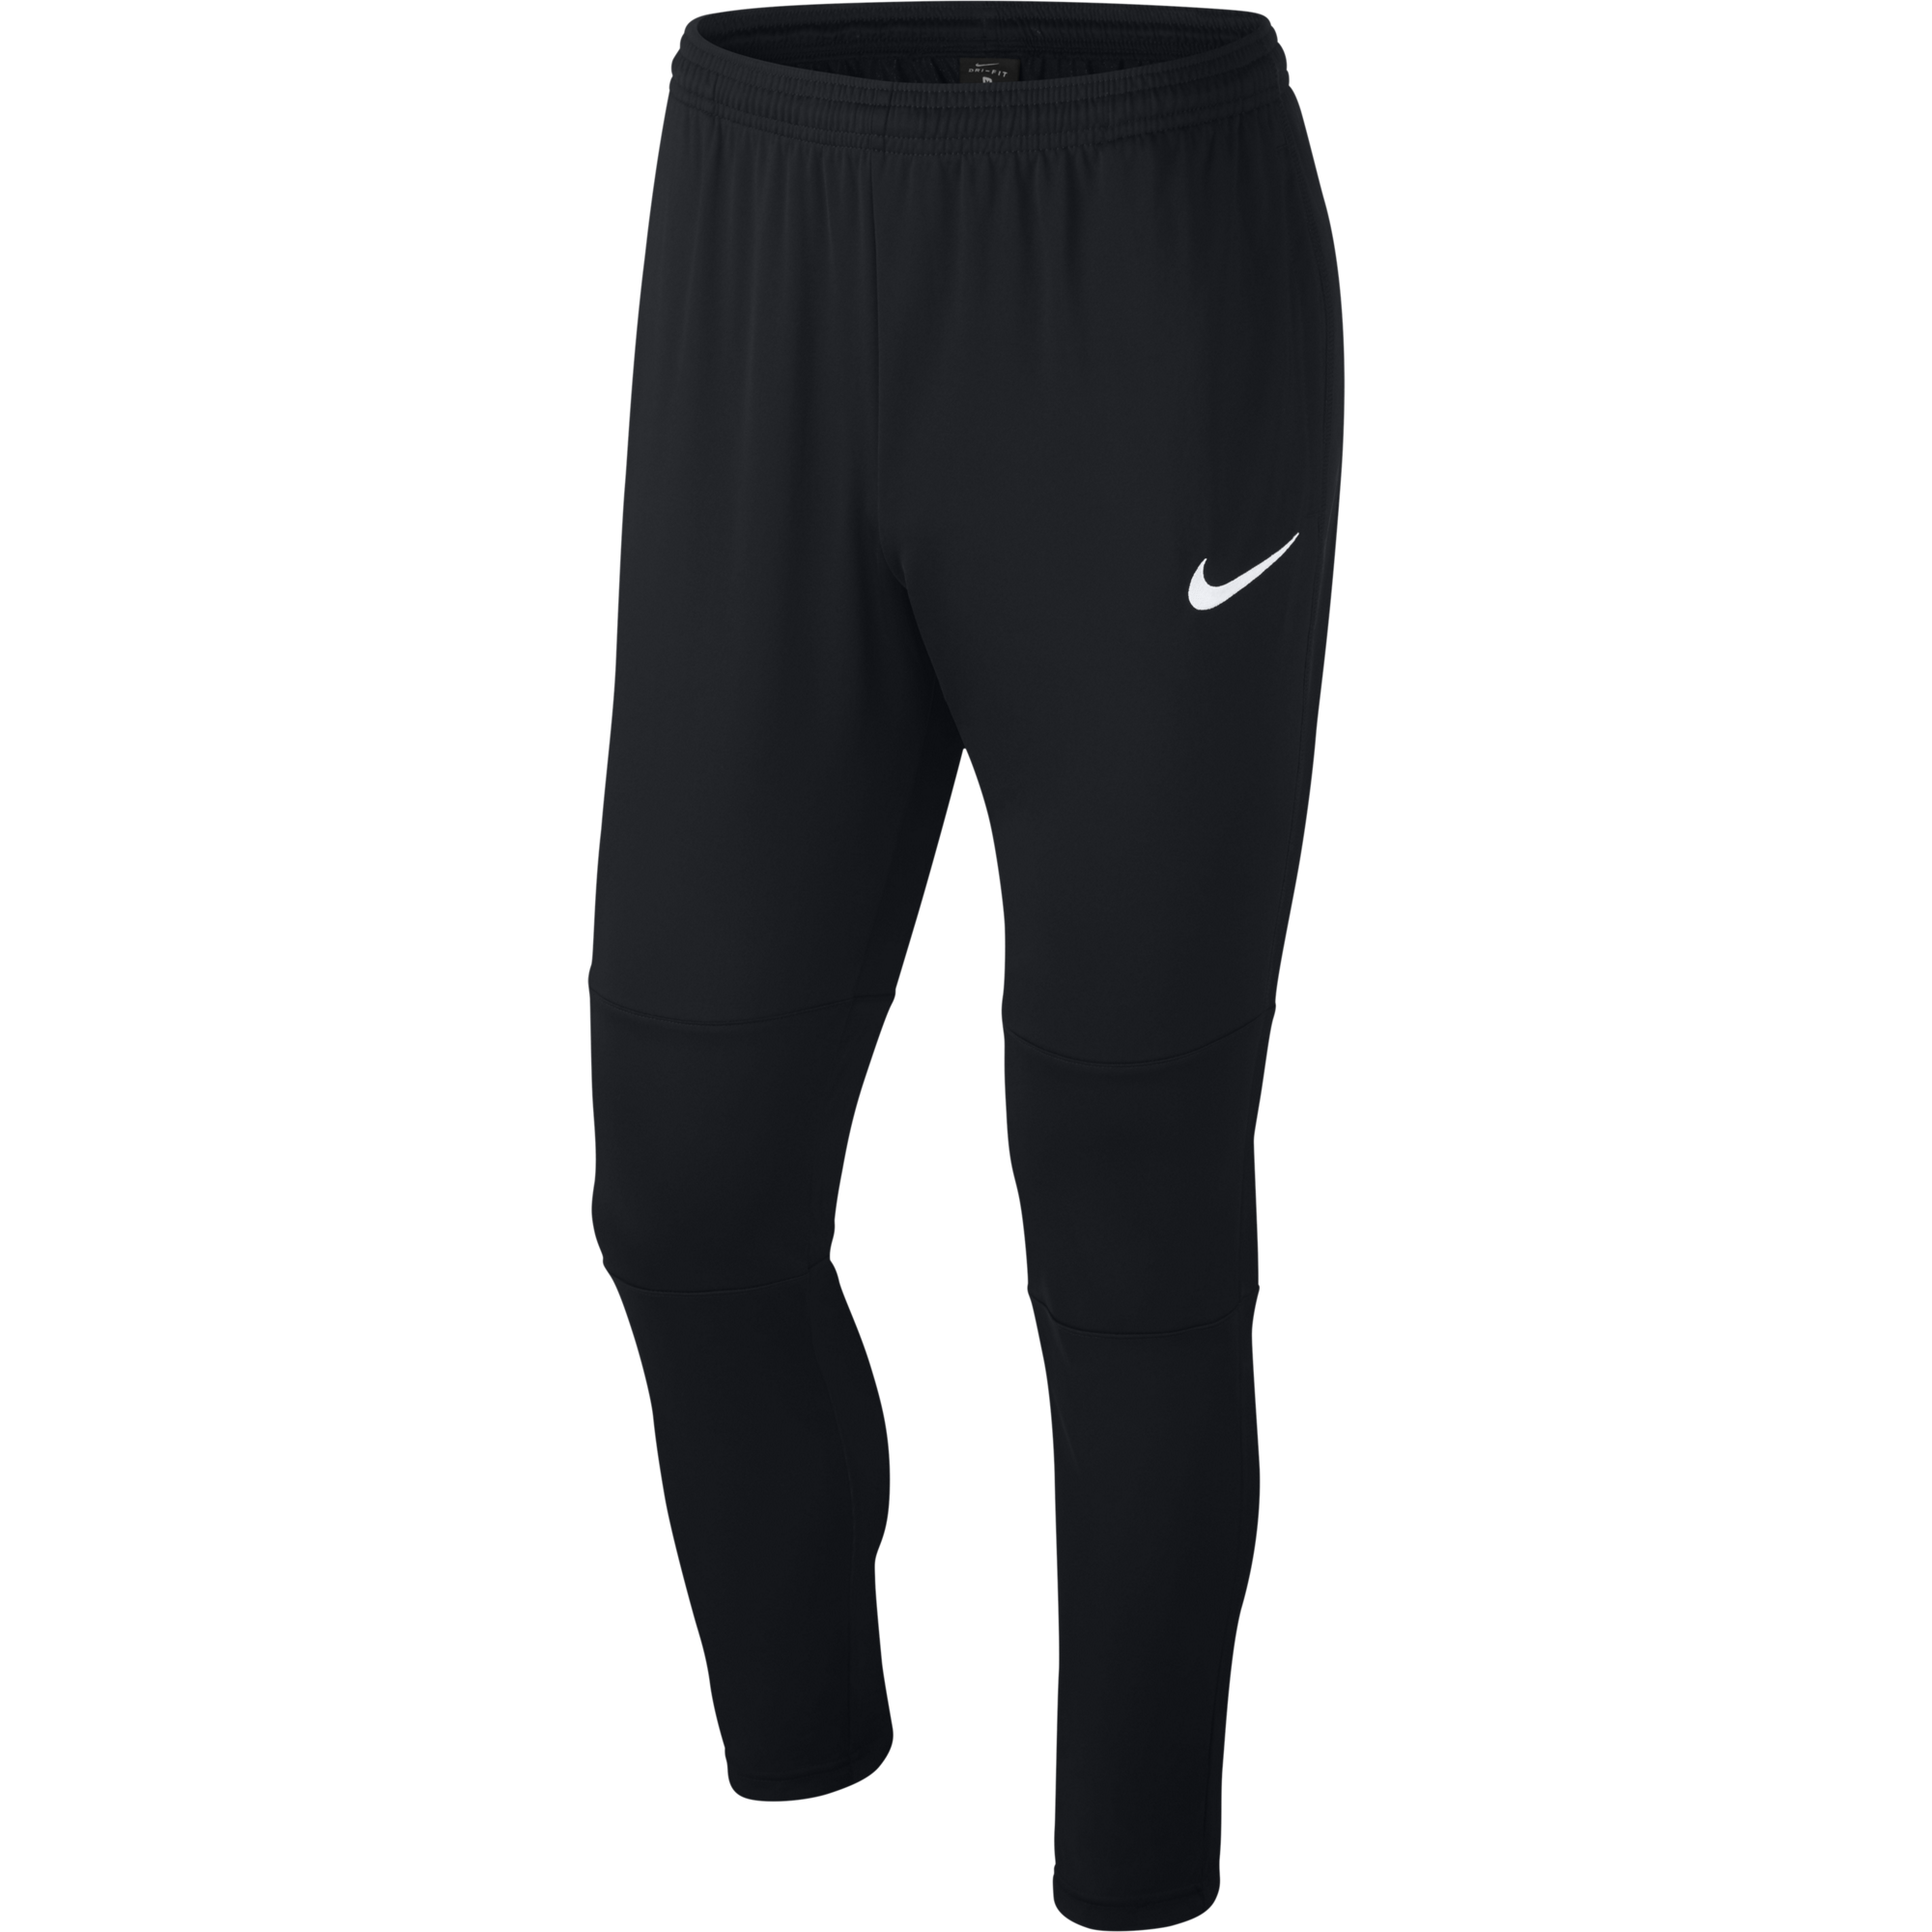 Ingles F.C. - Nike Park 20 Knit Pant, Youth, Black. - Fanatics Supplies